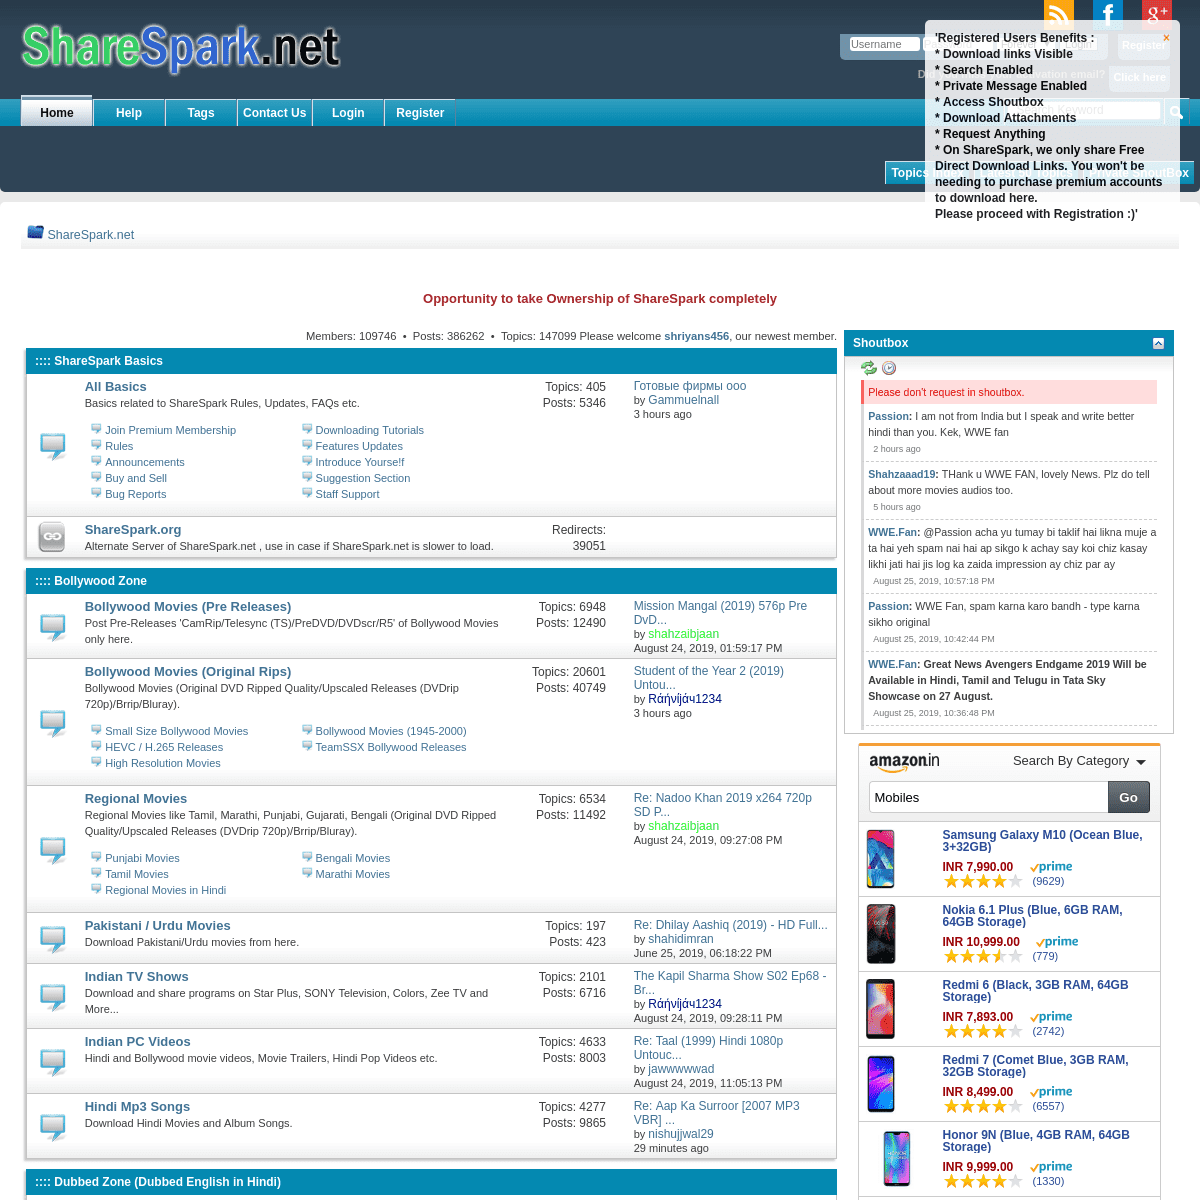 ShareSpark.net - Sharing Entire World of Entertainment